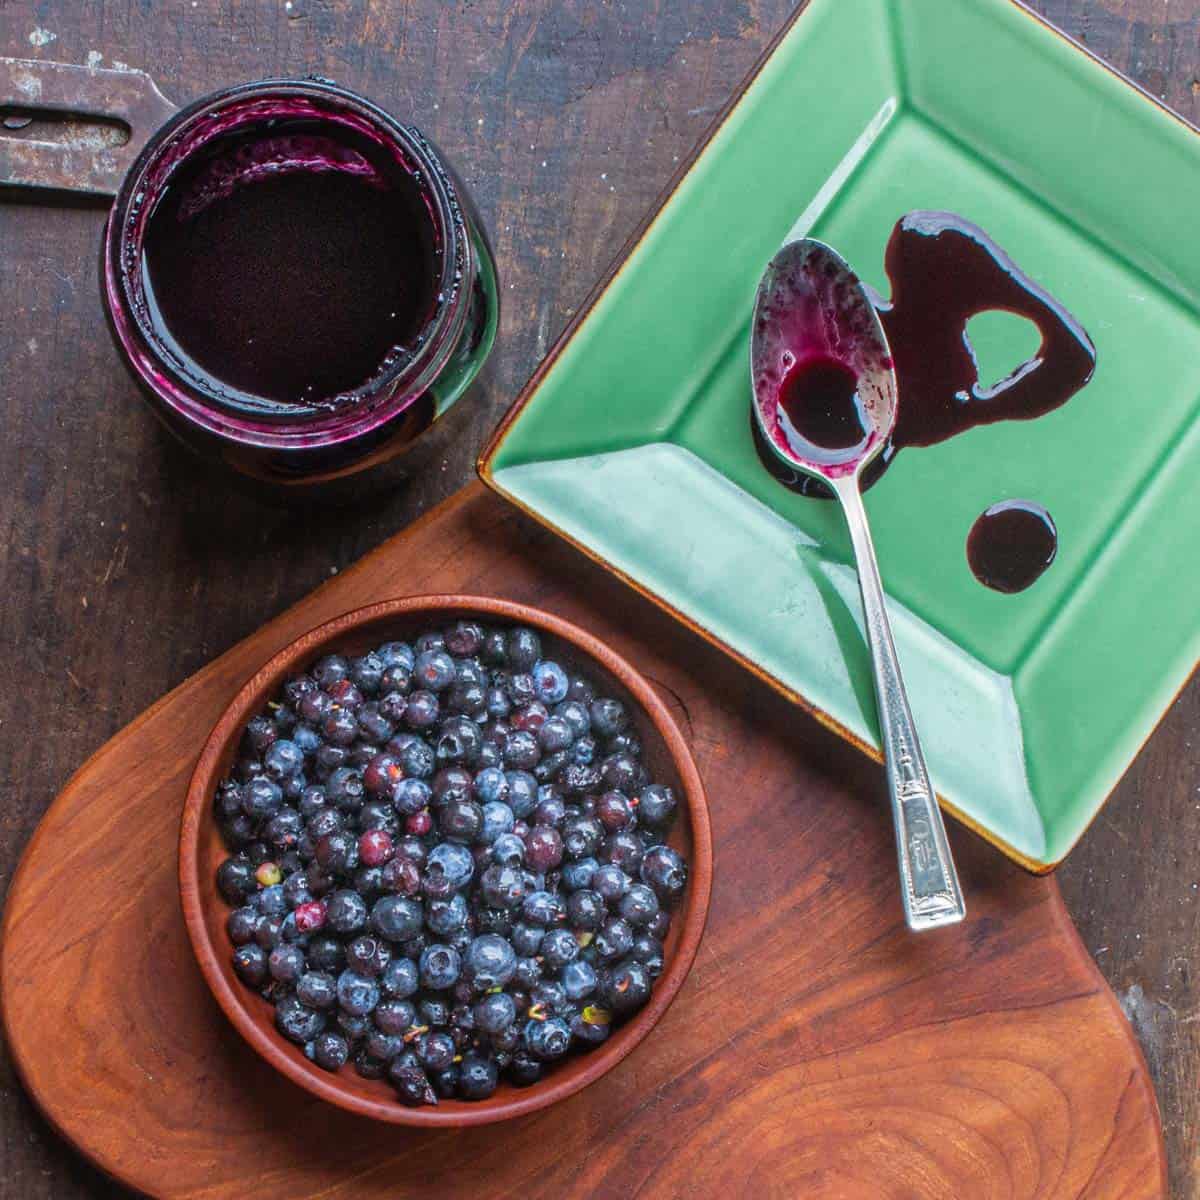 Wild blueberry juice reduction or molassses recipe